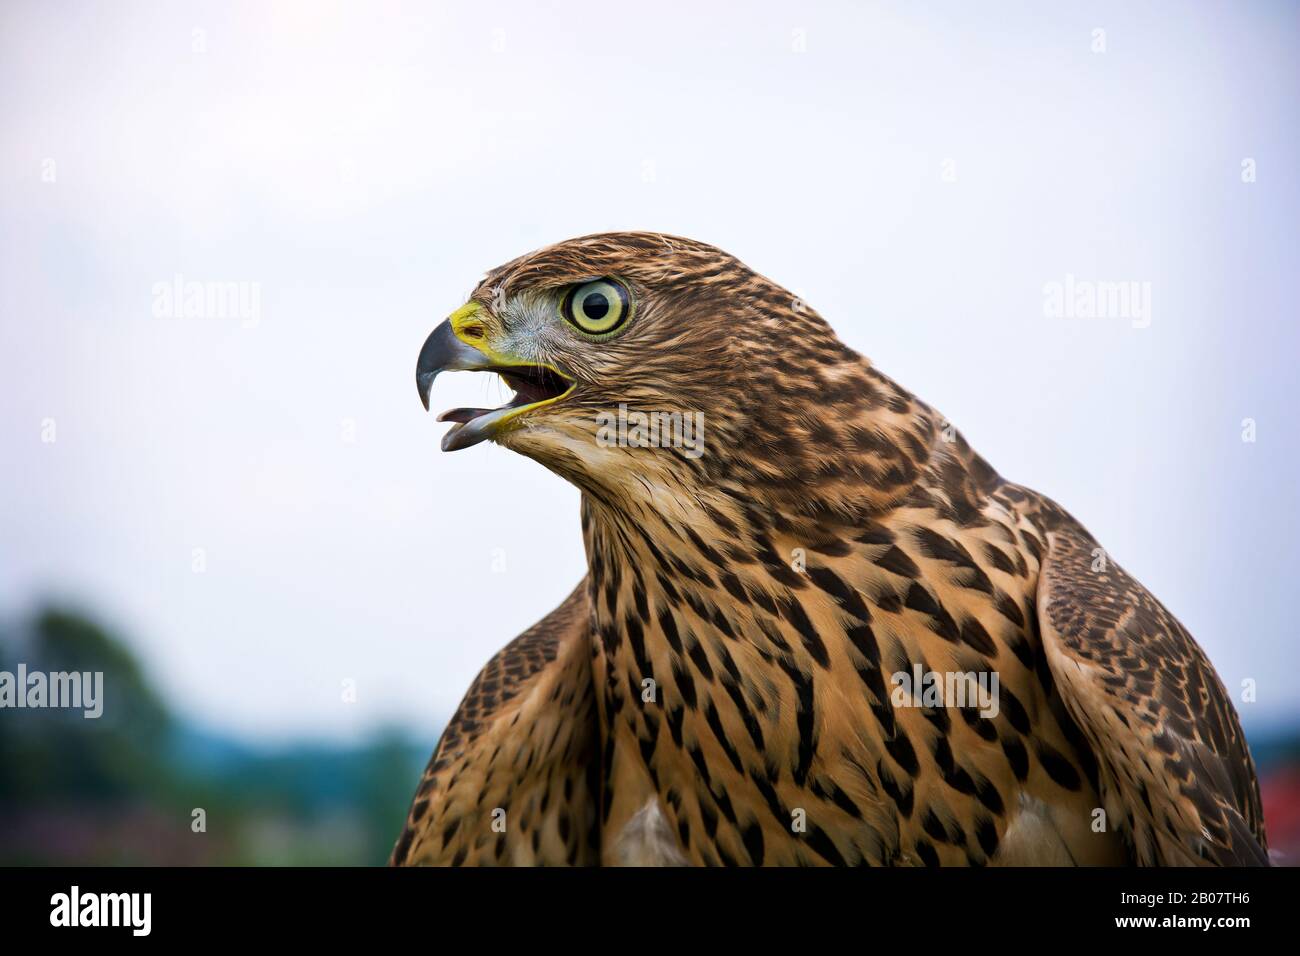 Hawk portrait. Birds of prey in nature. Stock Photo